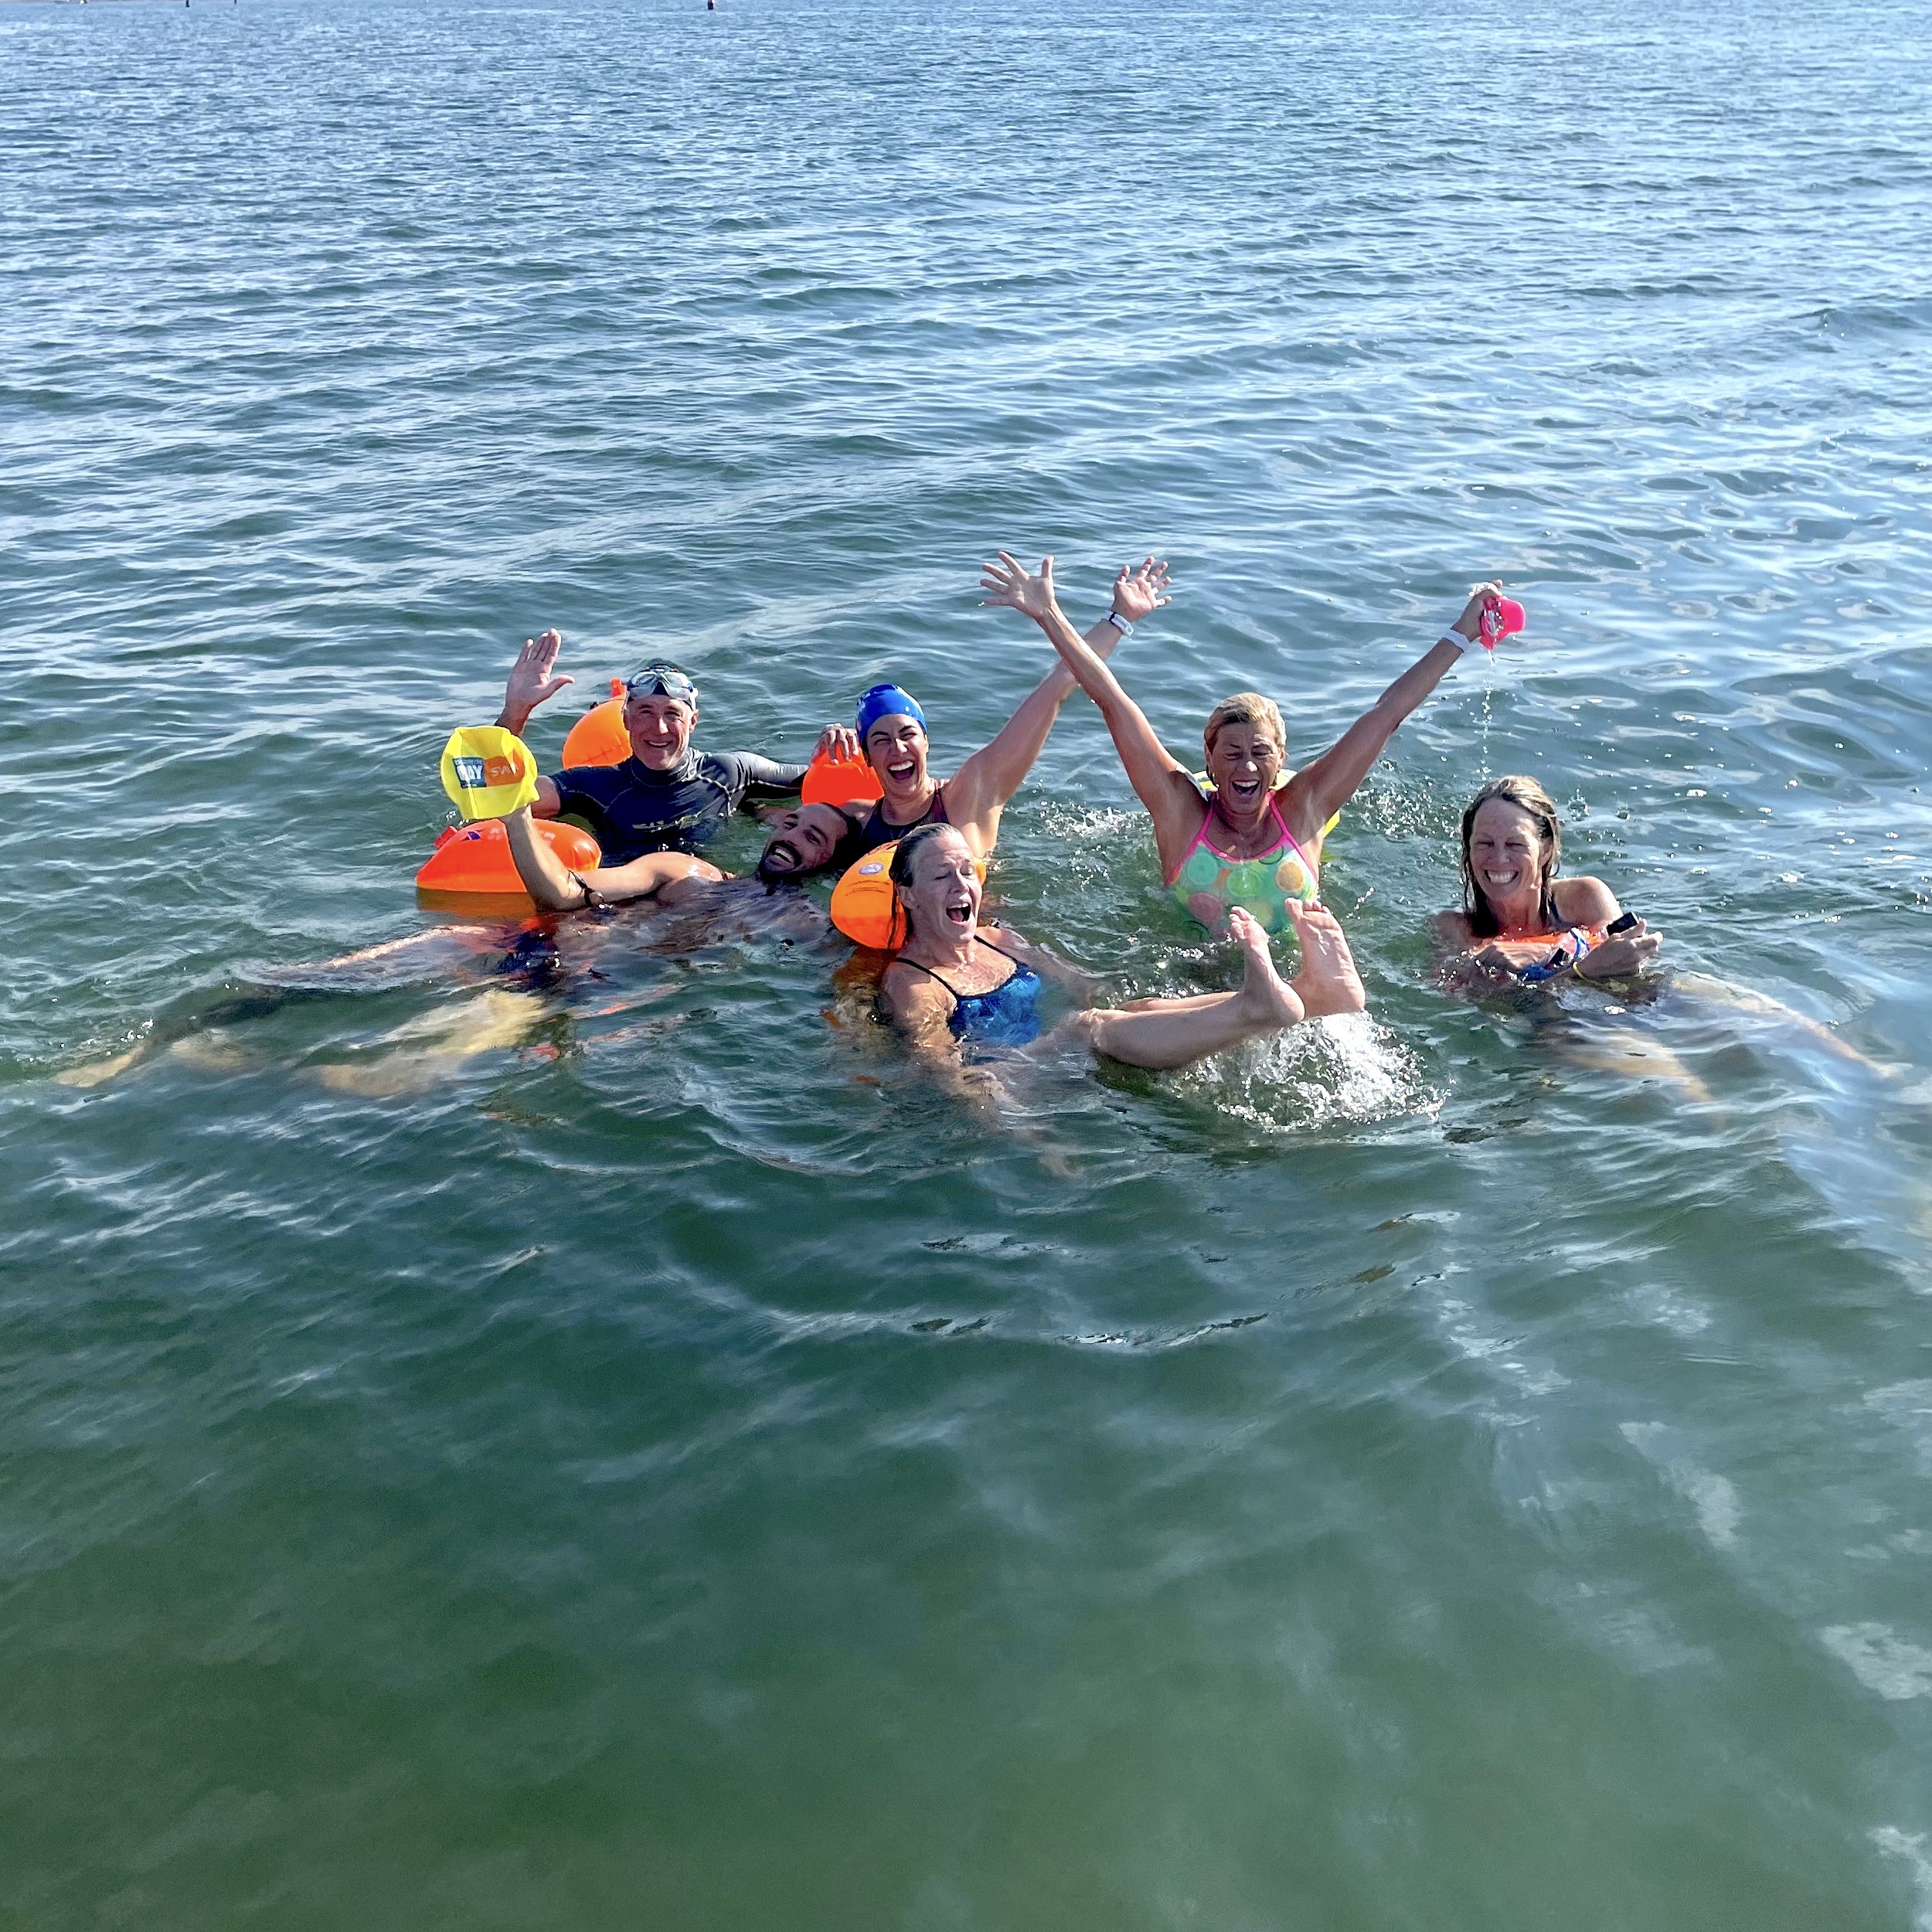 A small subset of the Chappy Swimmers, featuring: Rick Rheinhardt, Blake Cole, Kalina Grabb, Meri Gilson, Mary Kaminski, and Moira McCollough. [Photo: Chuck Redington]